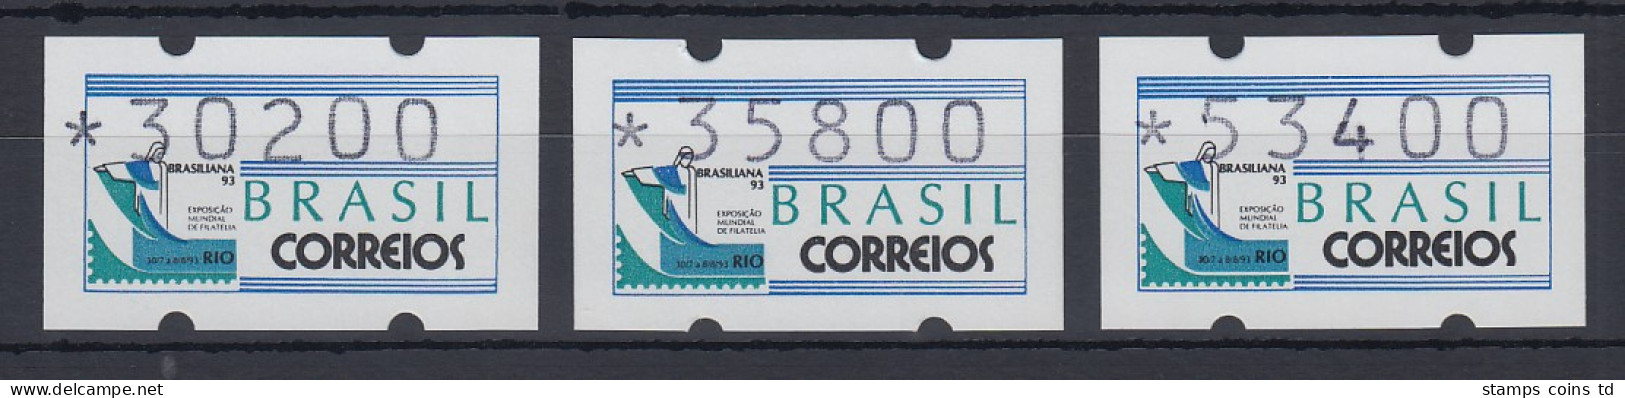 Brasilien Klüssendorf-ATM 1993 BRASILIANA Mi-Nr 5 Satz 30200 - 35800 - 53400 ** - Automatenmarken (Frama)